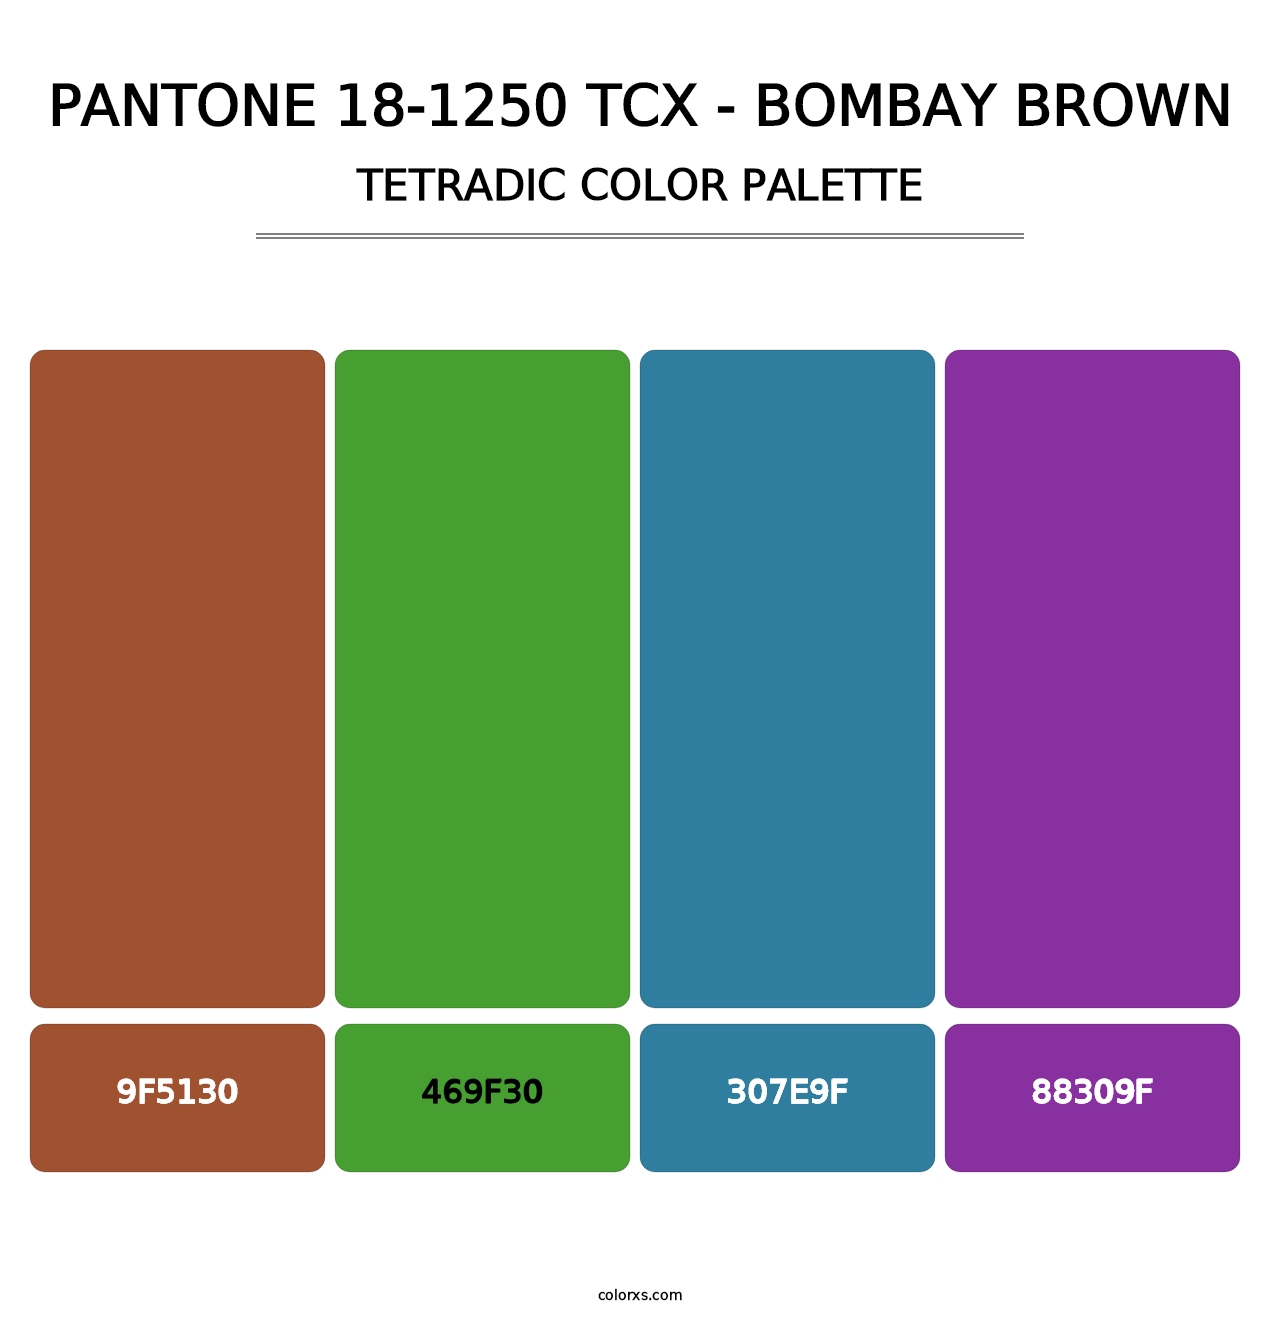 PANTONE 18-1250 TCX - Bombay Brown - Tetradic Color Palette